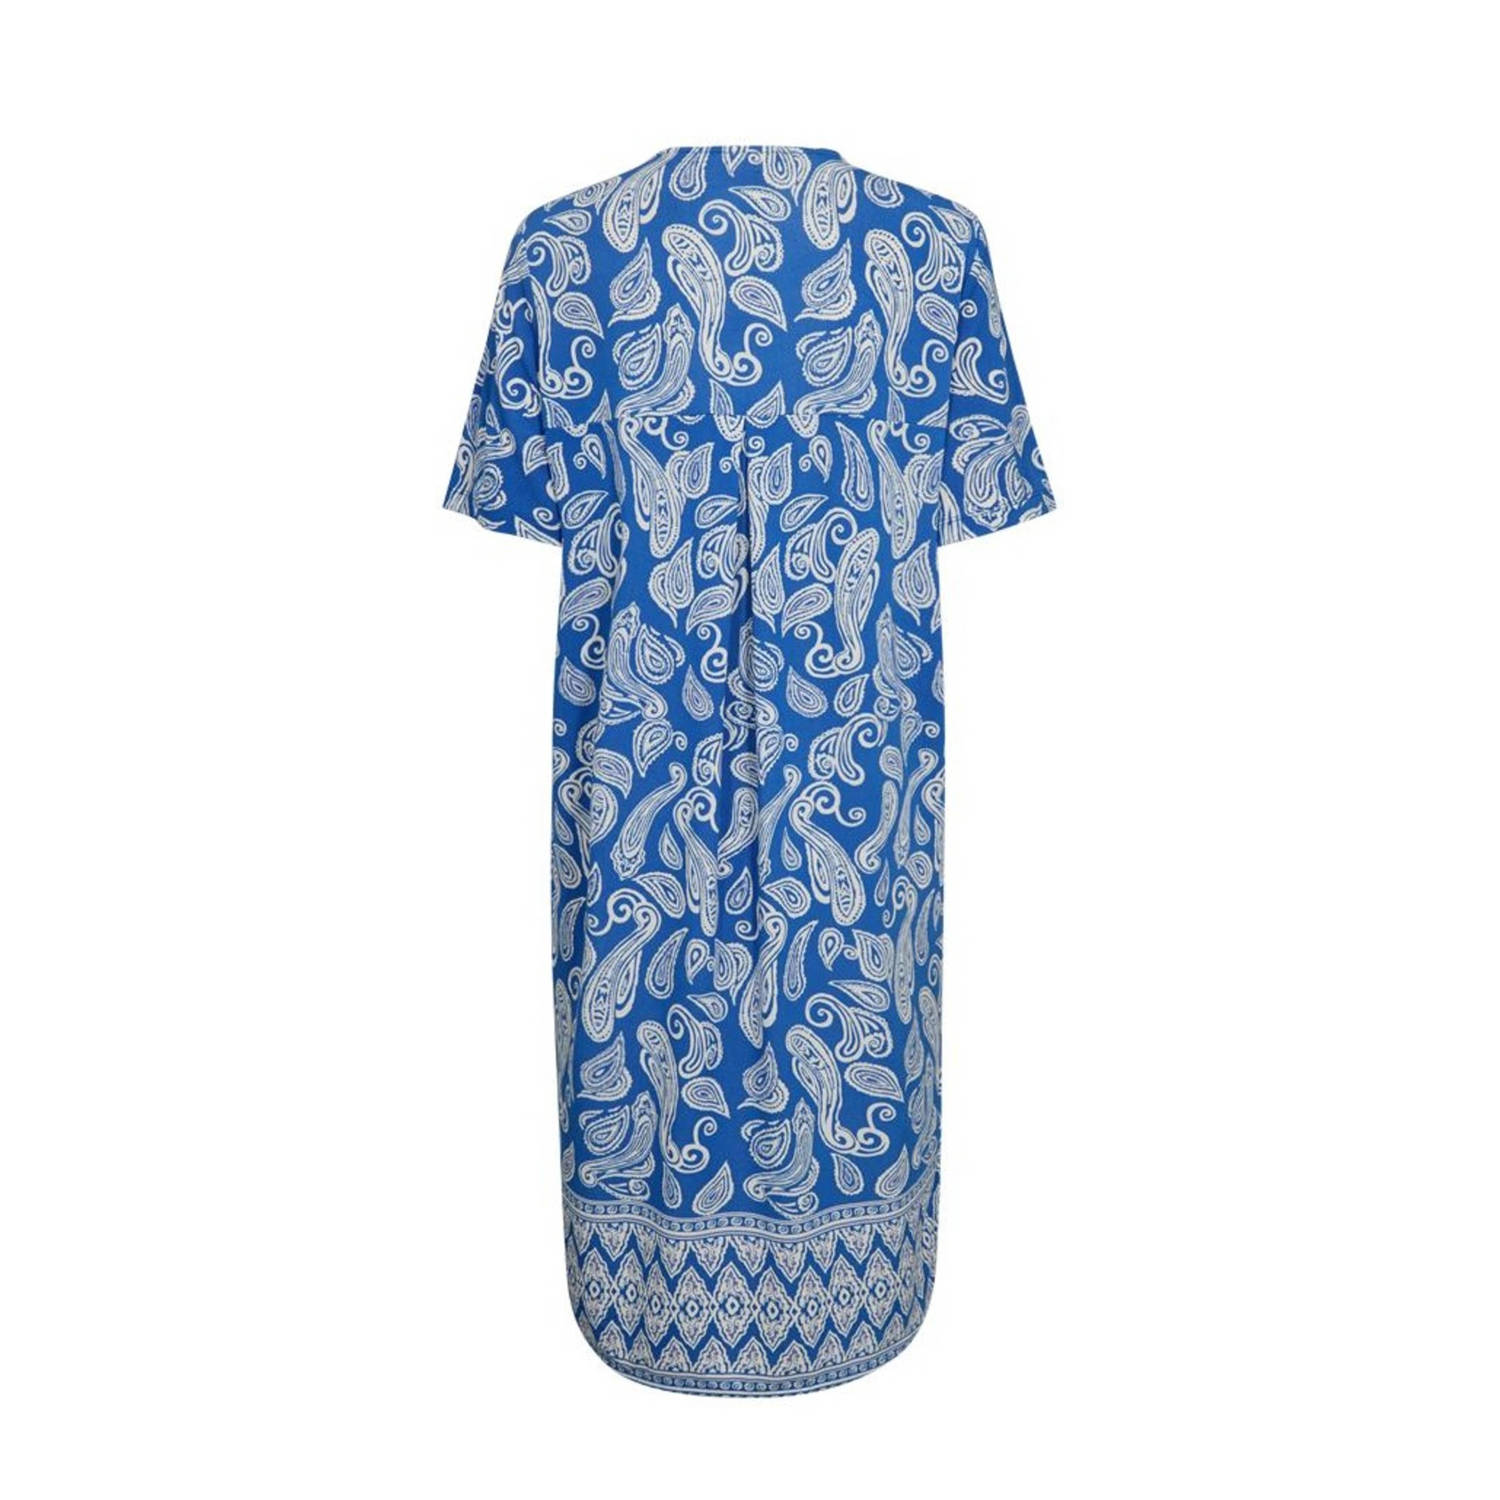 FREEQUENT jurk met paisleyprint blauw ecru